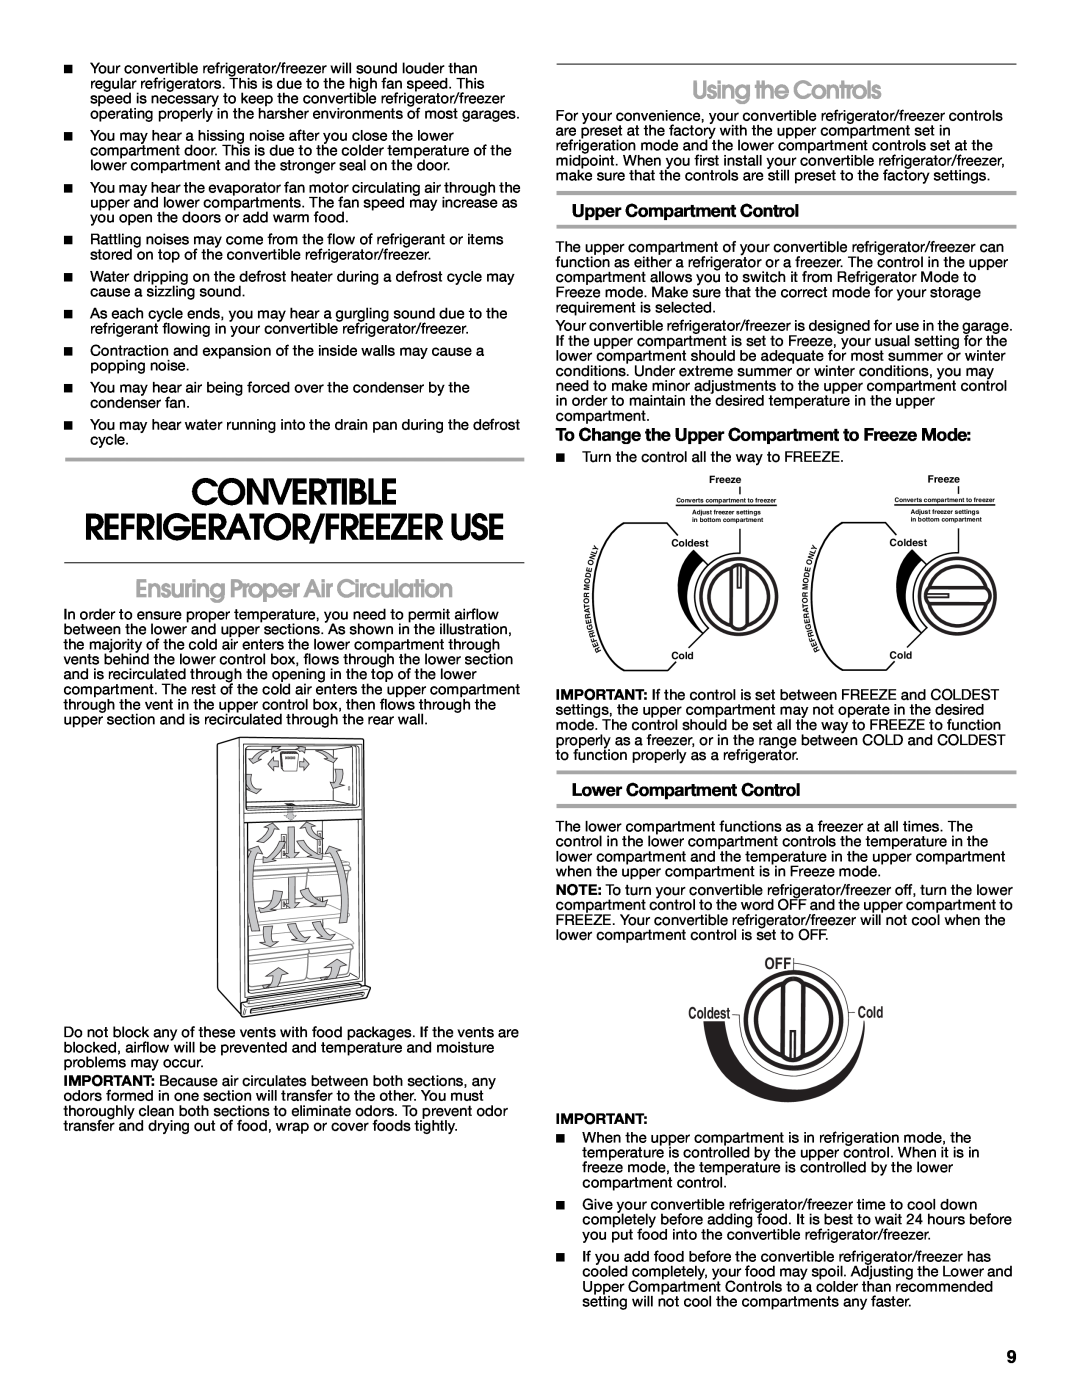 Whirlpool GAFZ21XXRK01 manual Convertible, Refrigerator/Freezer Use, Ensuring Proper Air Circulation, Using the Controls 